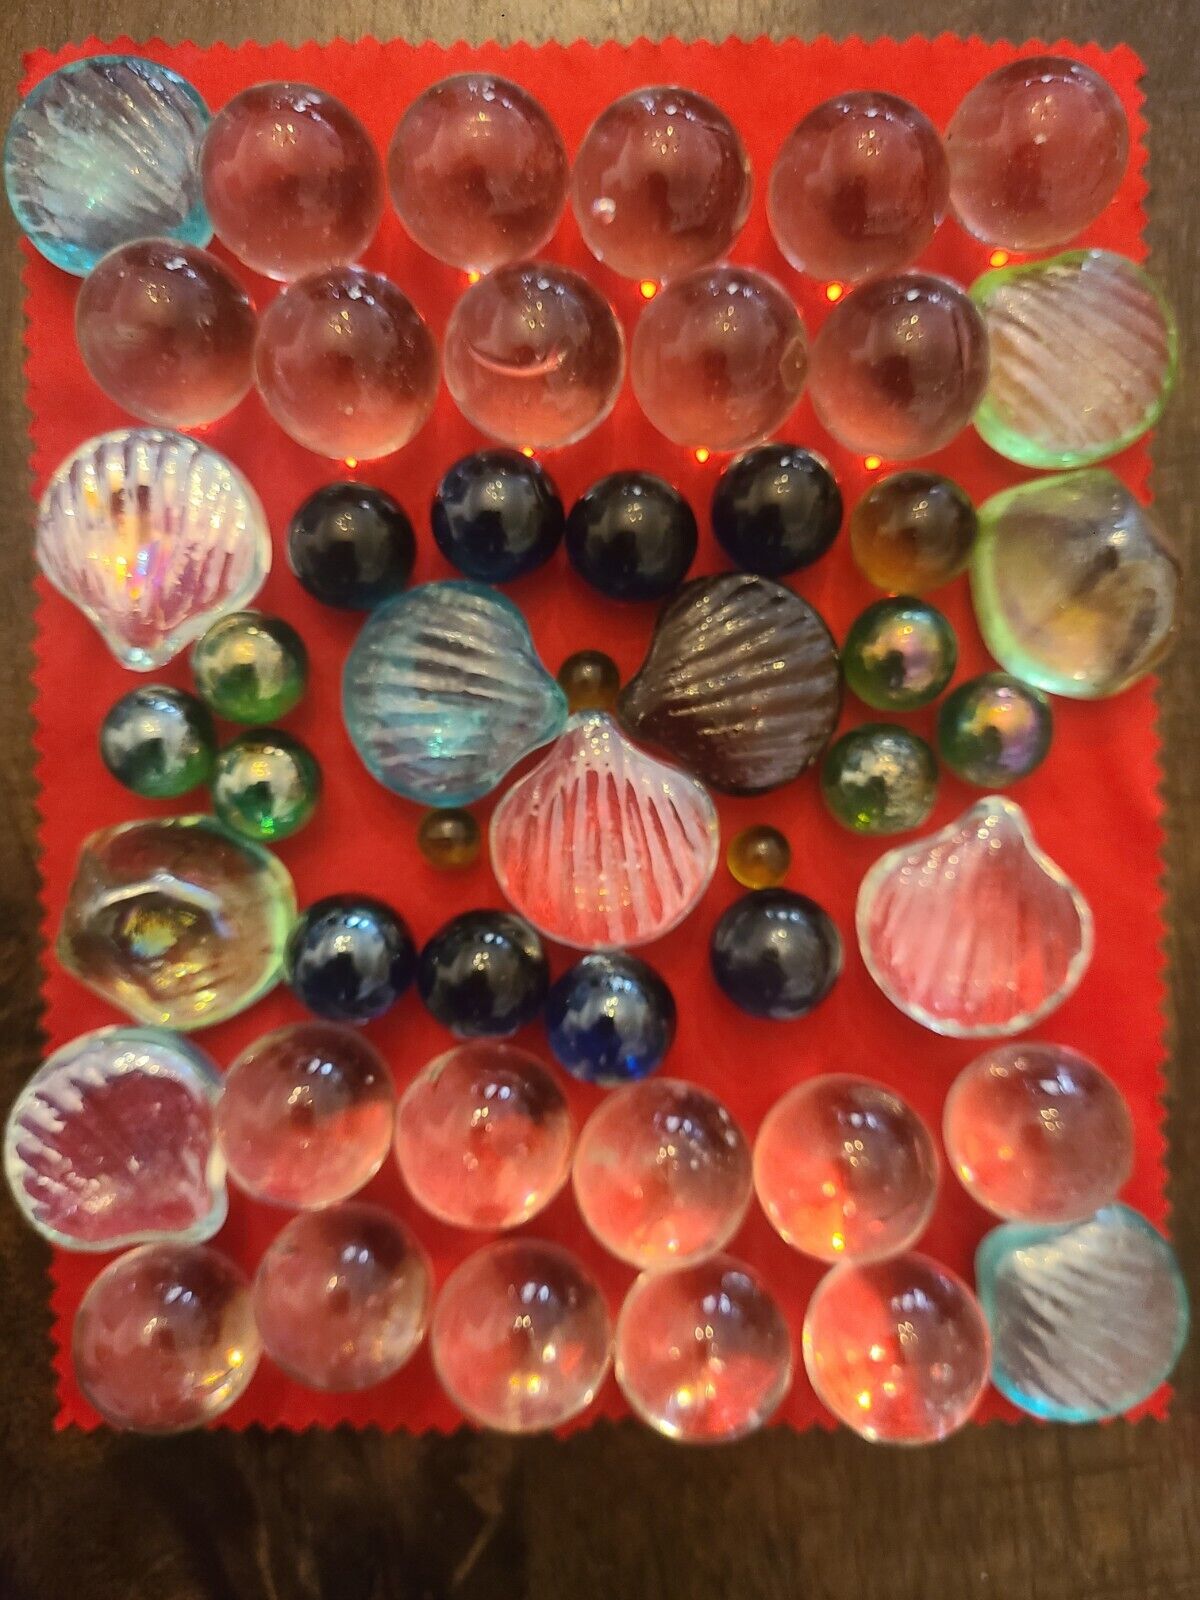 Lot of glowy glass shells and balls